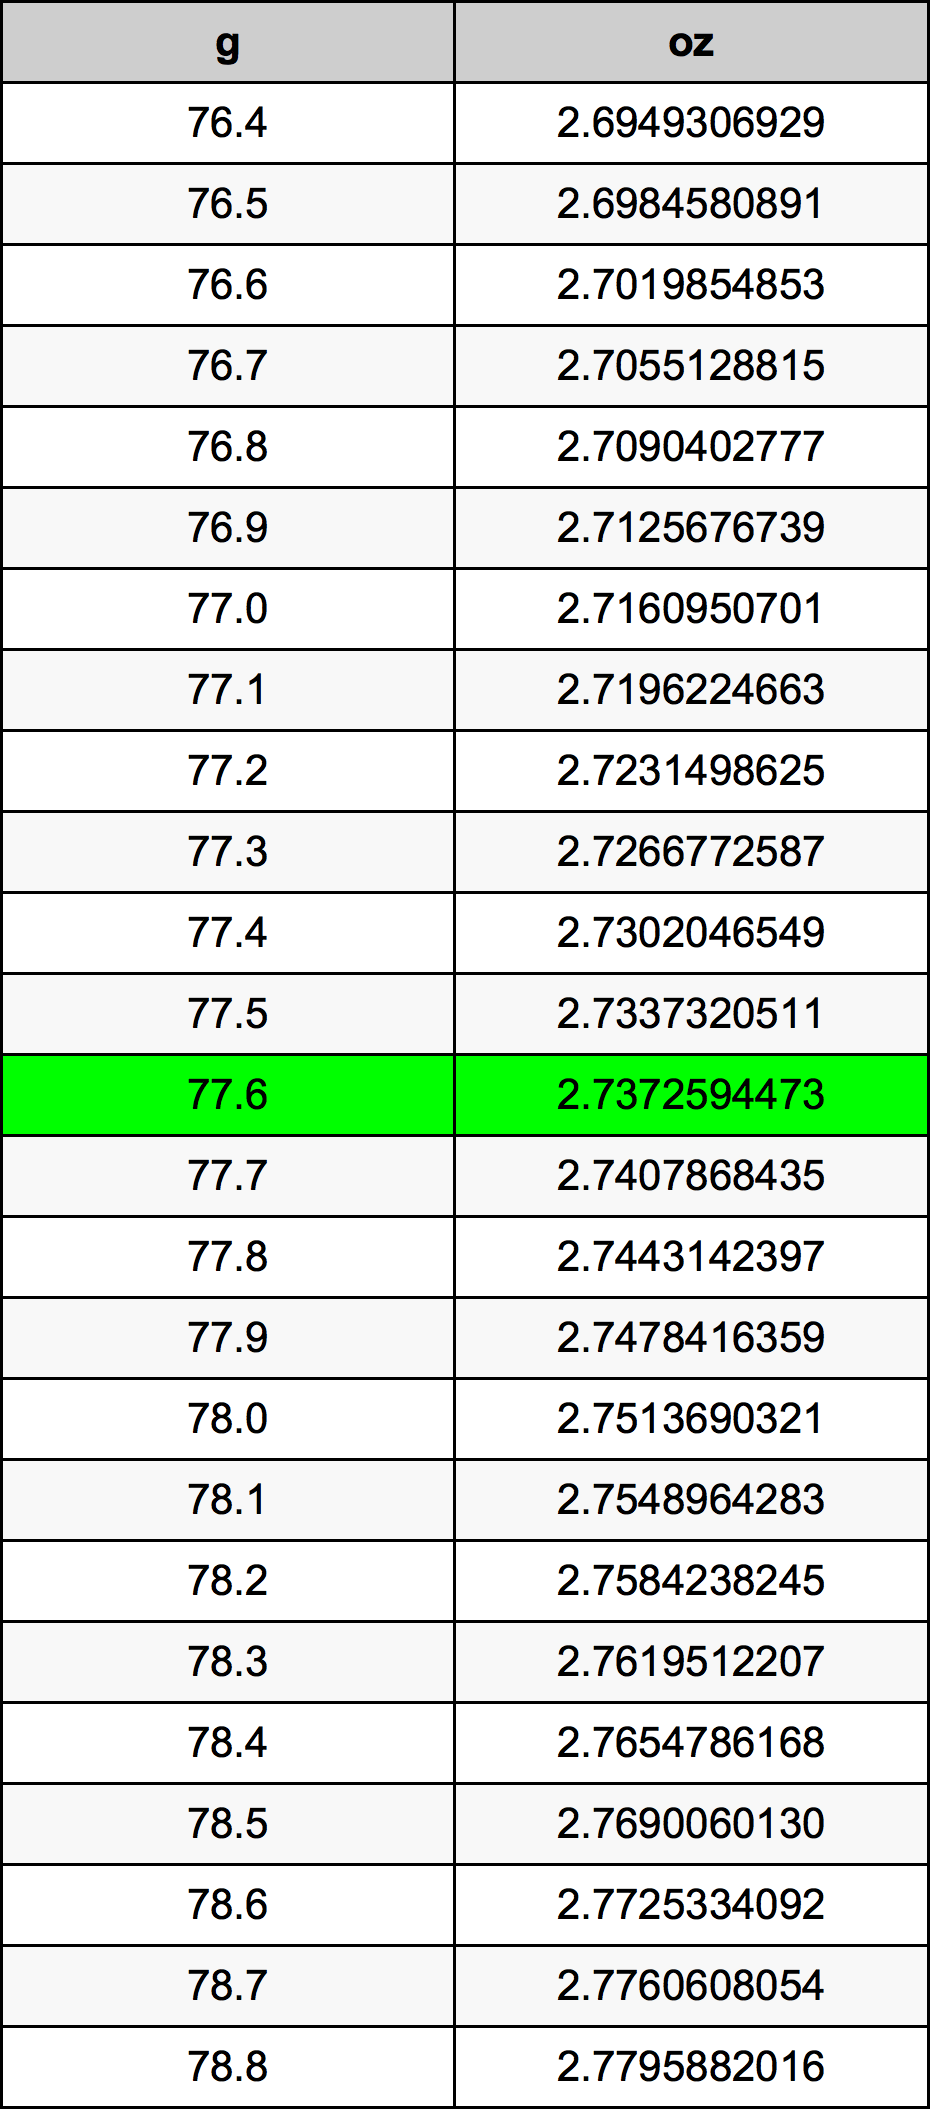 77.6 غرام جدول تحويل